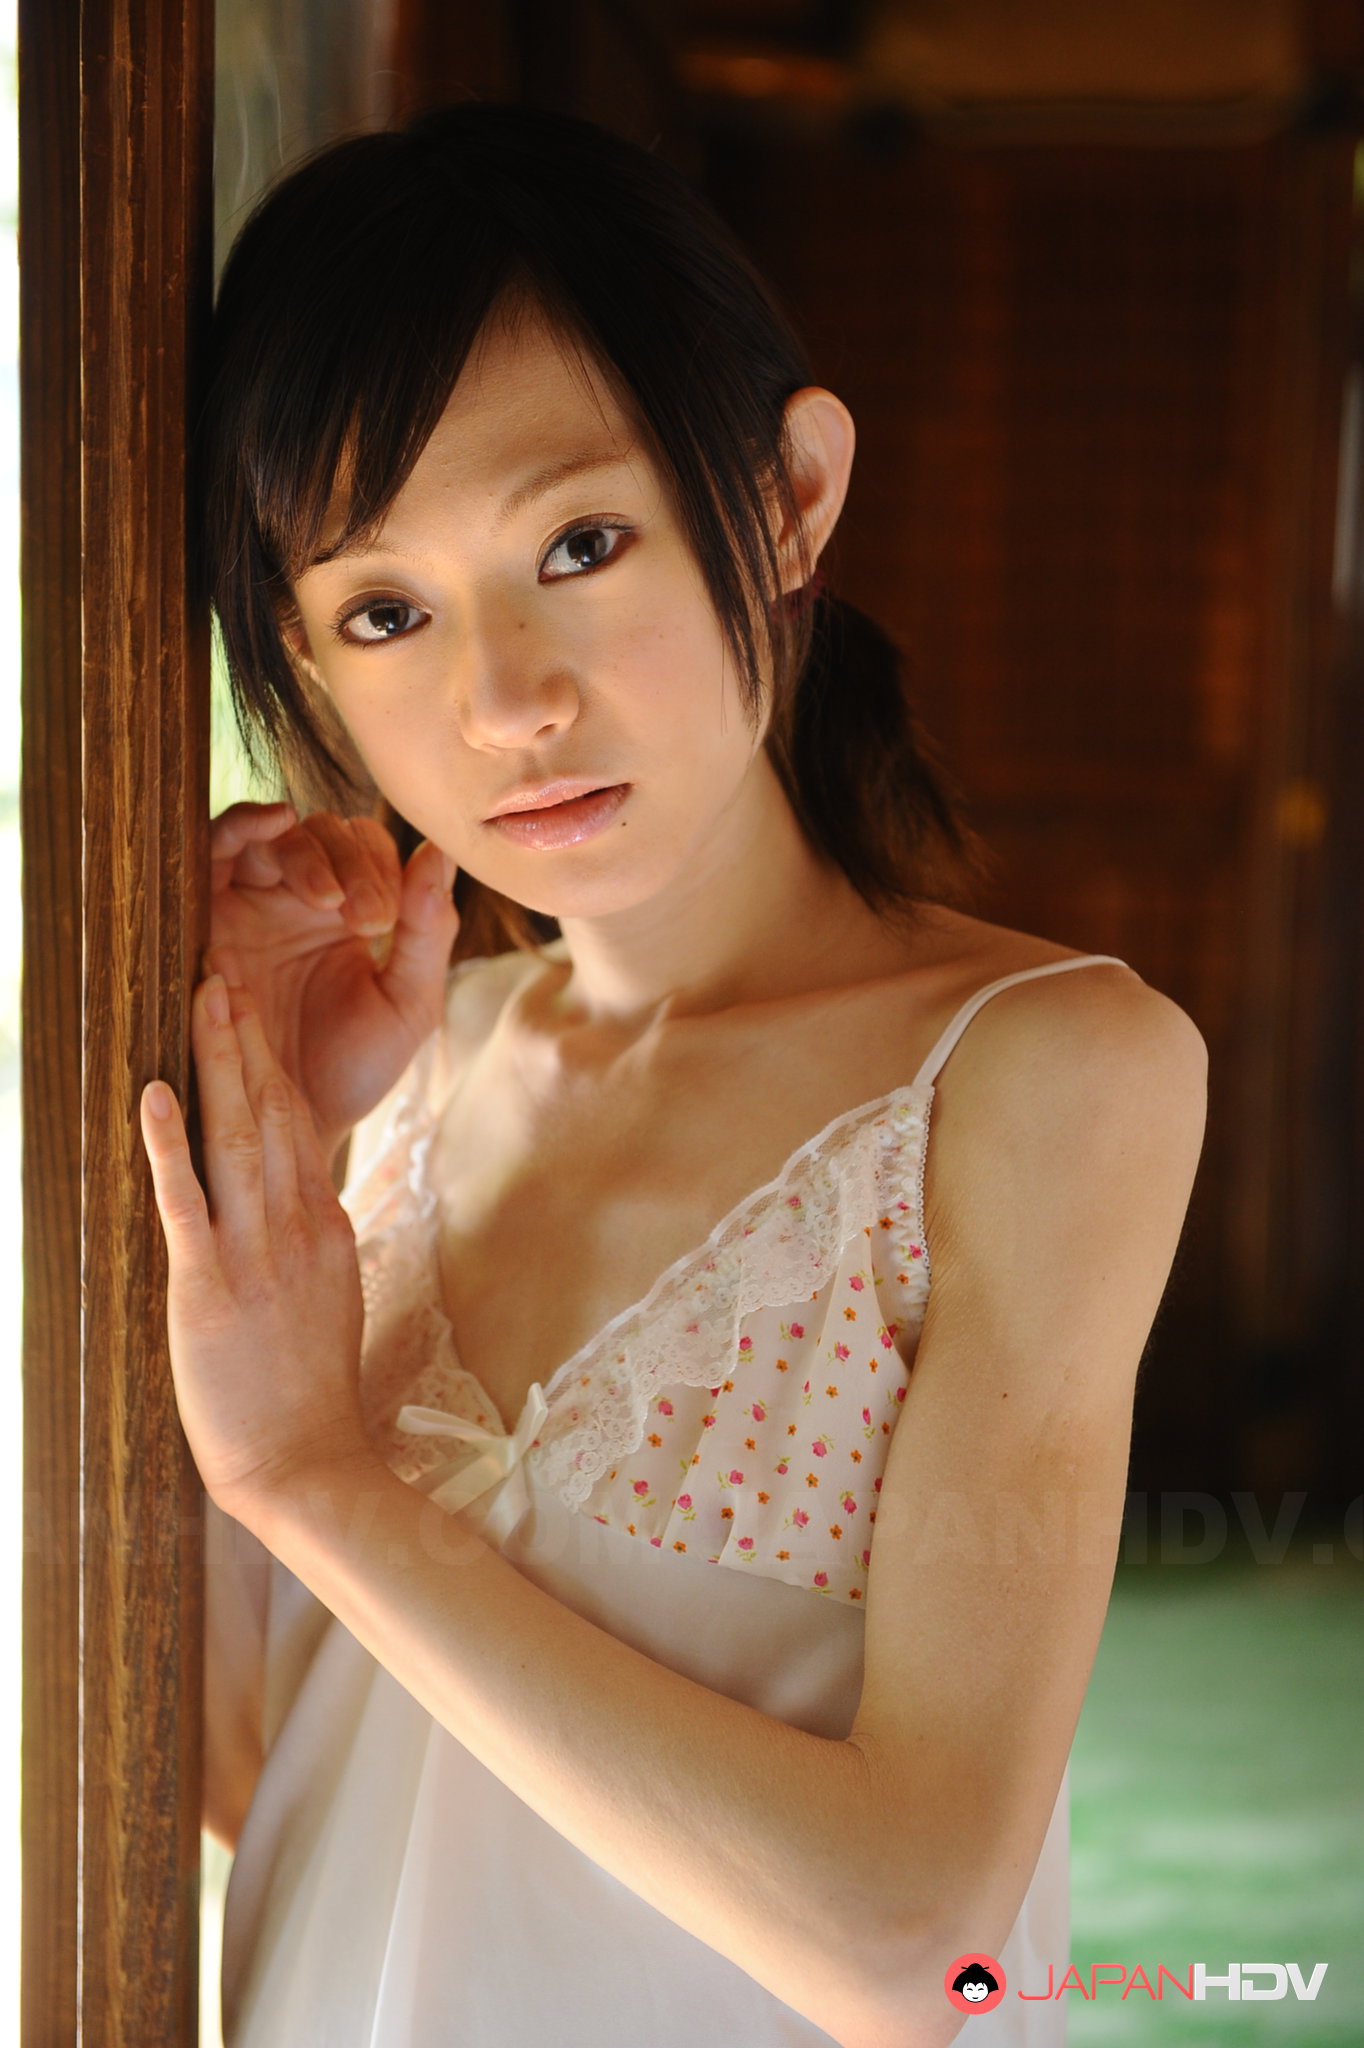 Petite Japanese Teen Nude